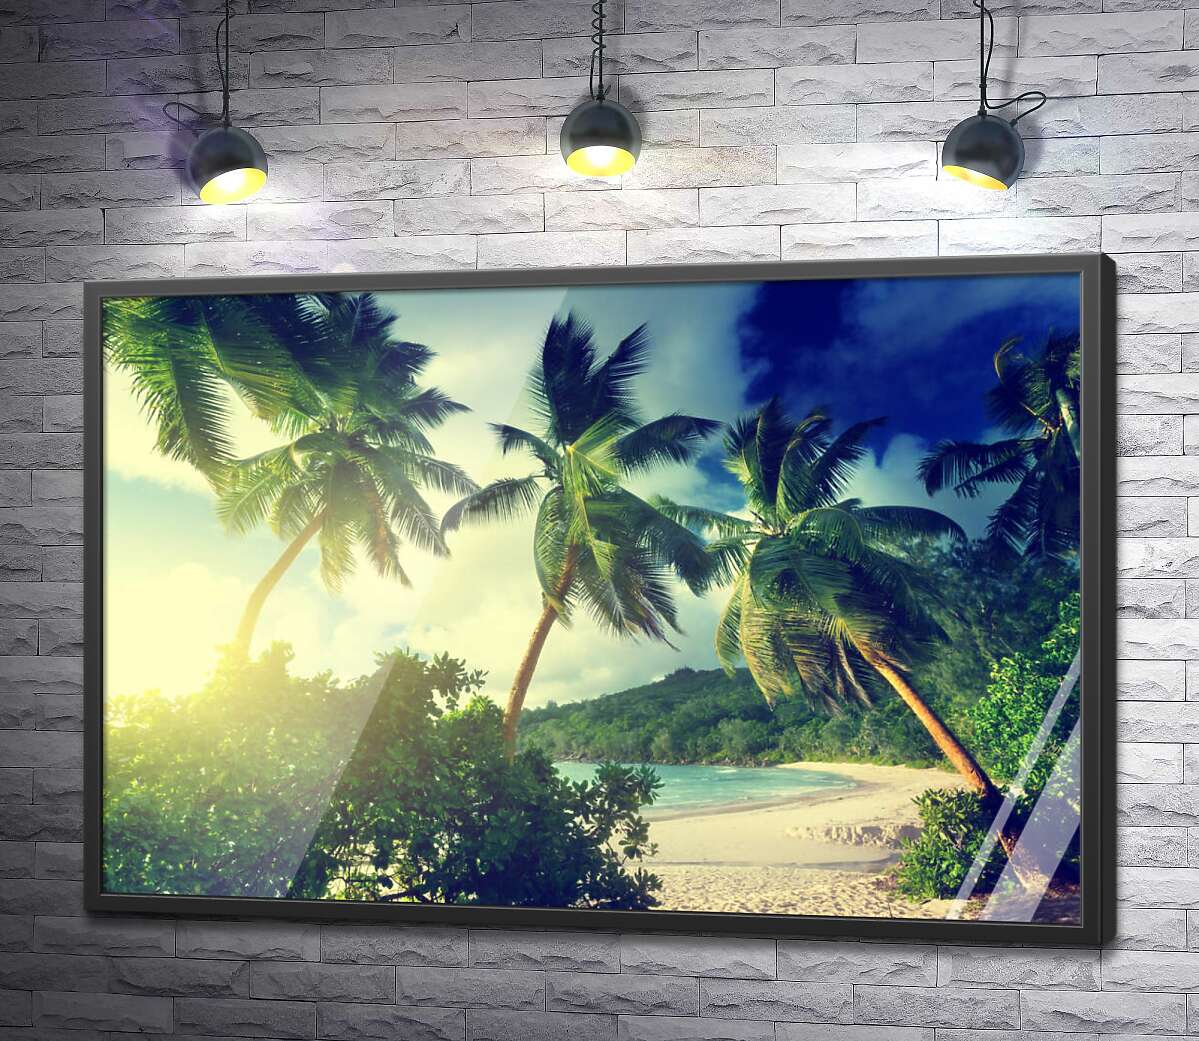 постер Сонячний пляж сховався за зеленими кущами та пальмами